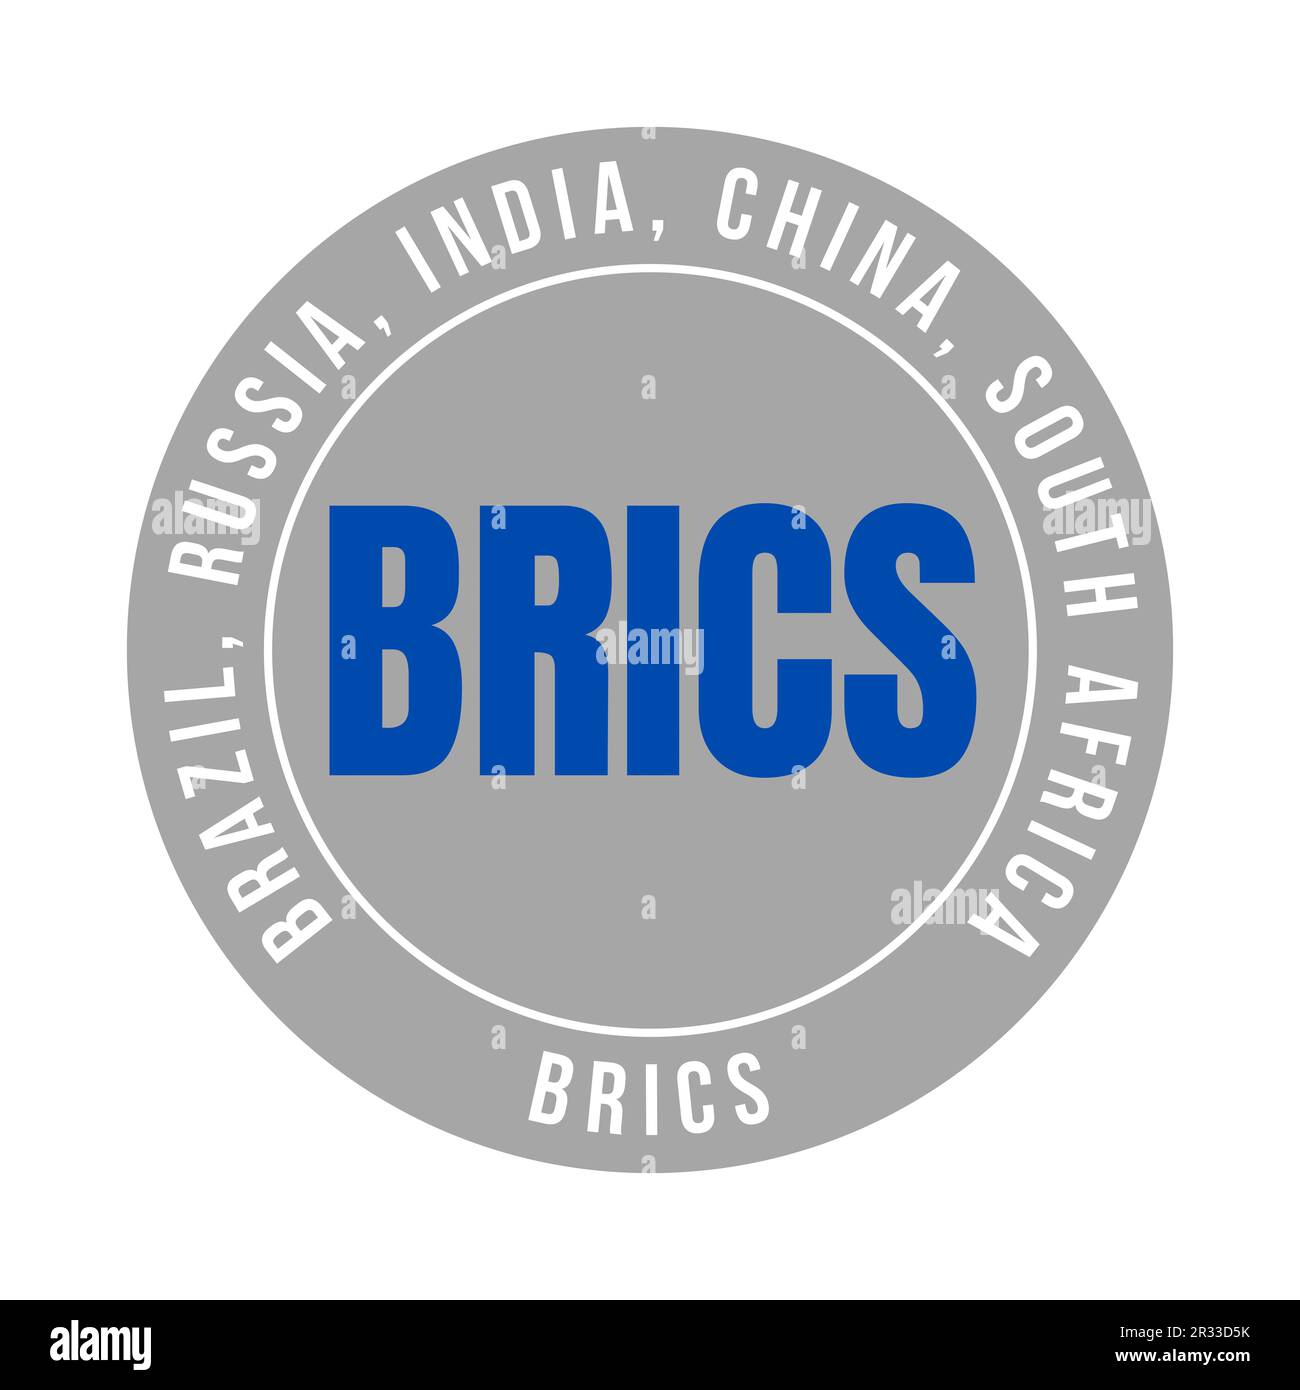 BRICS Brazil, Russia, India, China and South Africa symbol icon Stock Photo